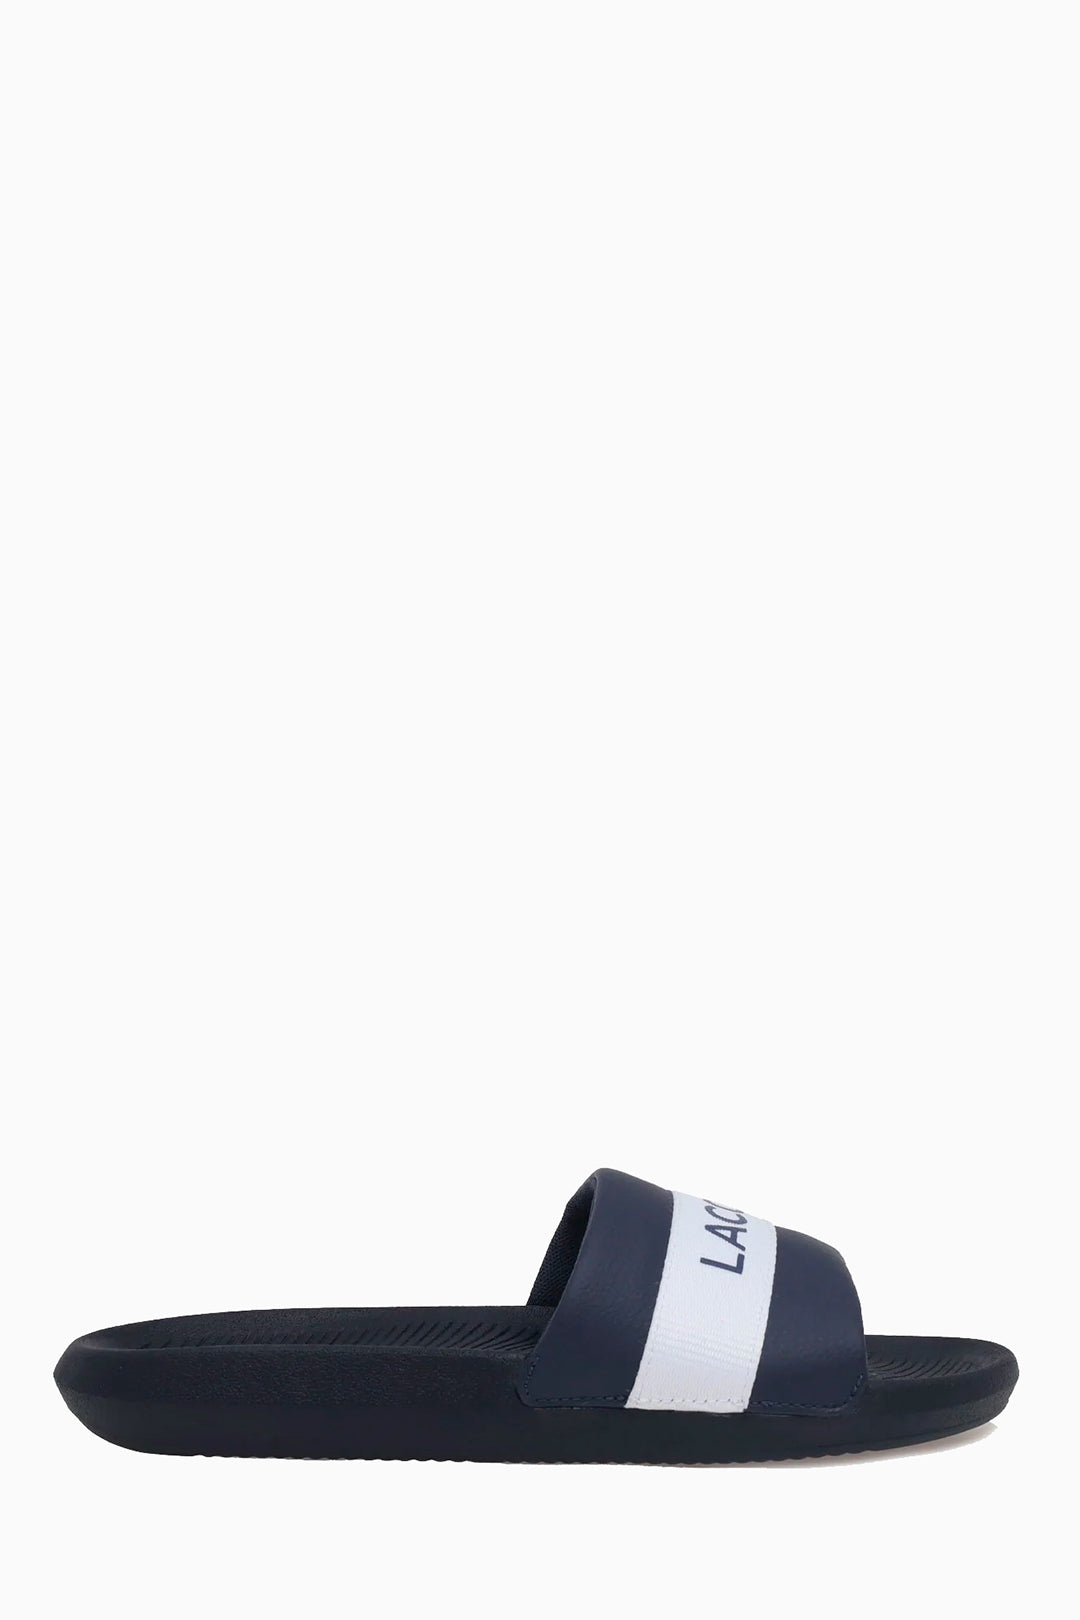 Lacoste Logo Sandal in Navy/White color (Laco-41Cma0007-092)